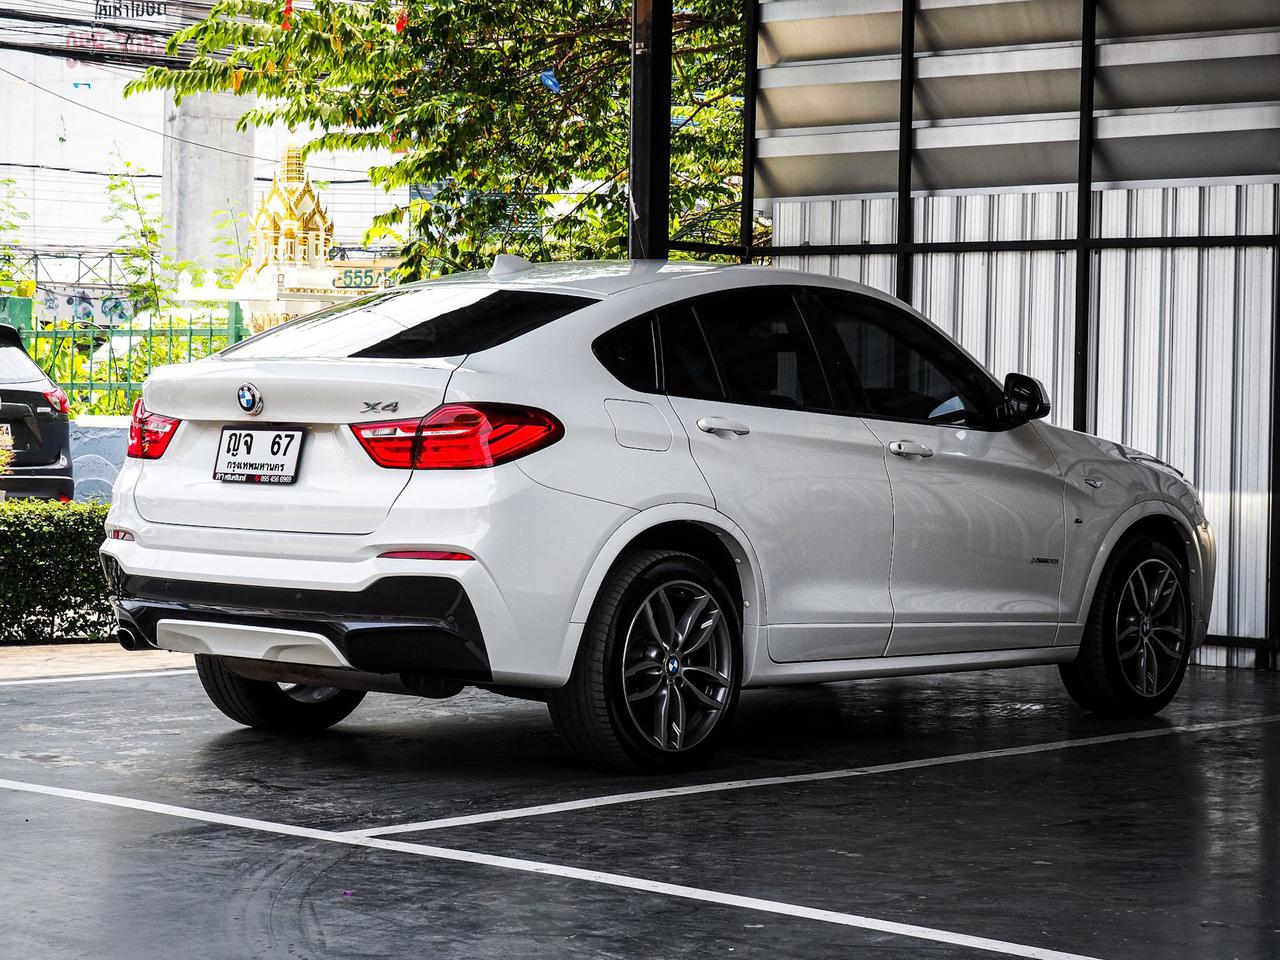 BMW X4 2.0 M Sport เบนซิน ปี 2019 สีขาว รุ่น Top สุด M Sport แท้ จากศูนย์ BMW รูปที่ 4